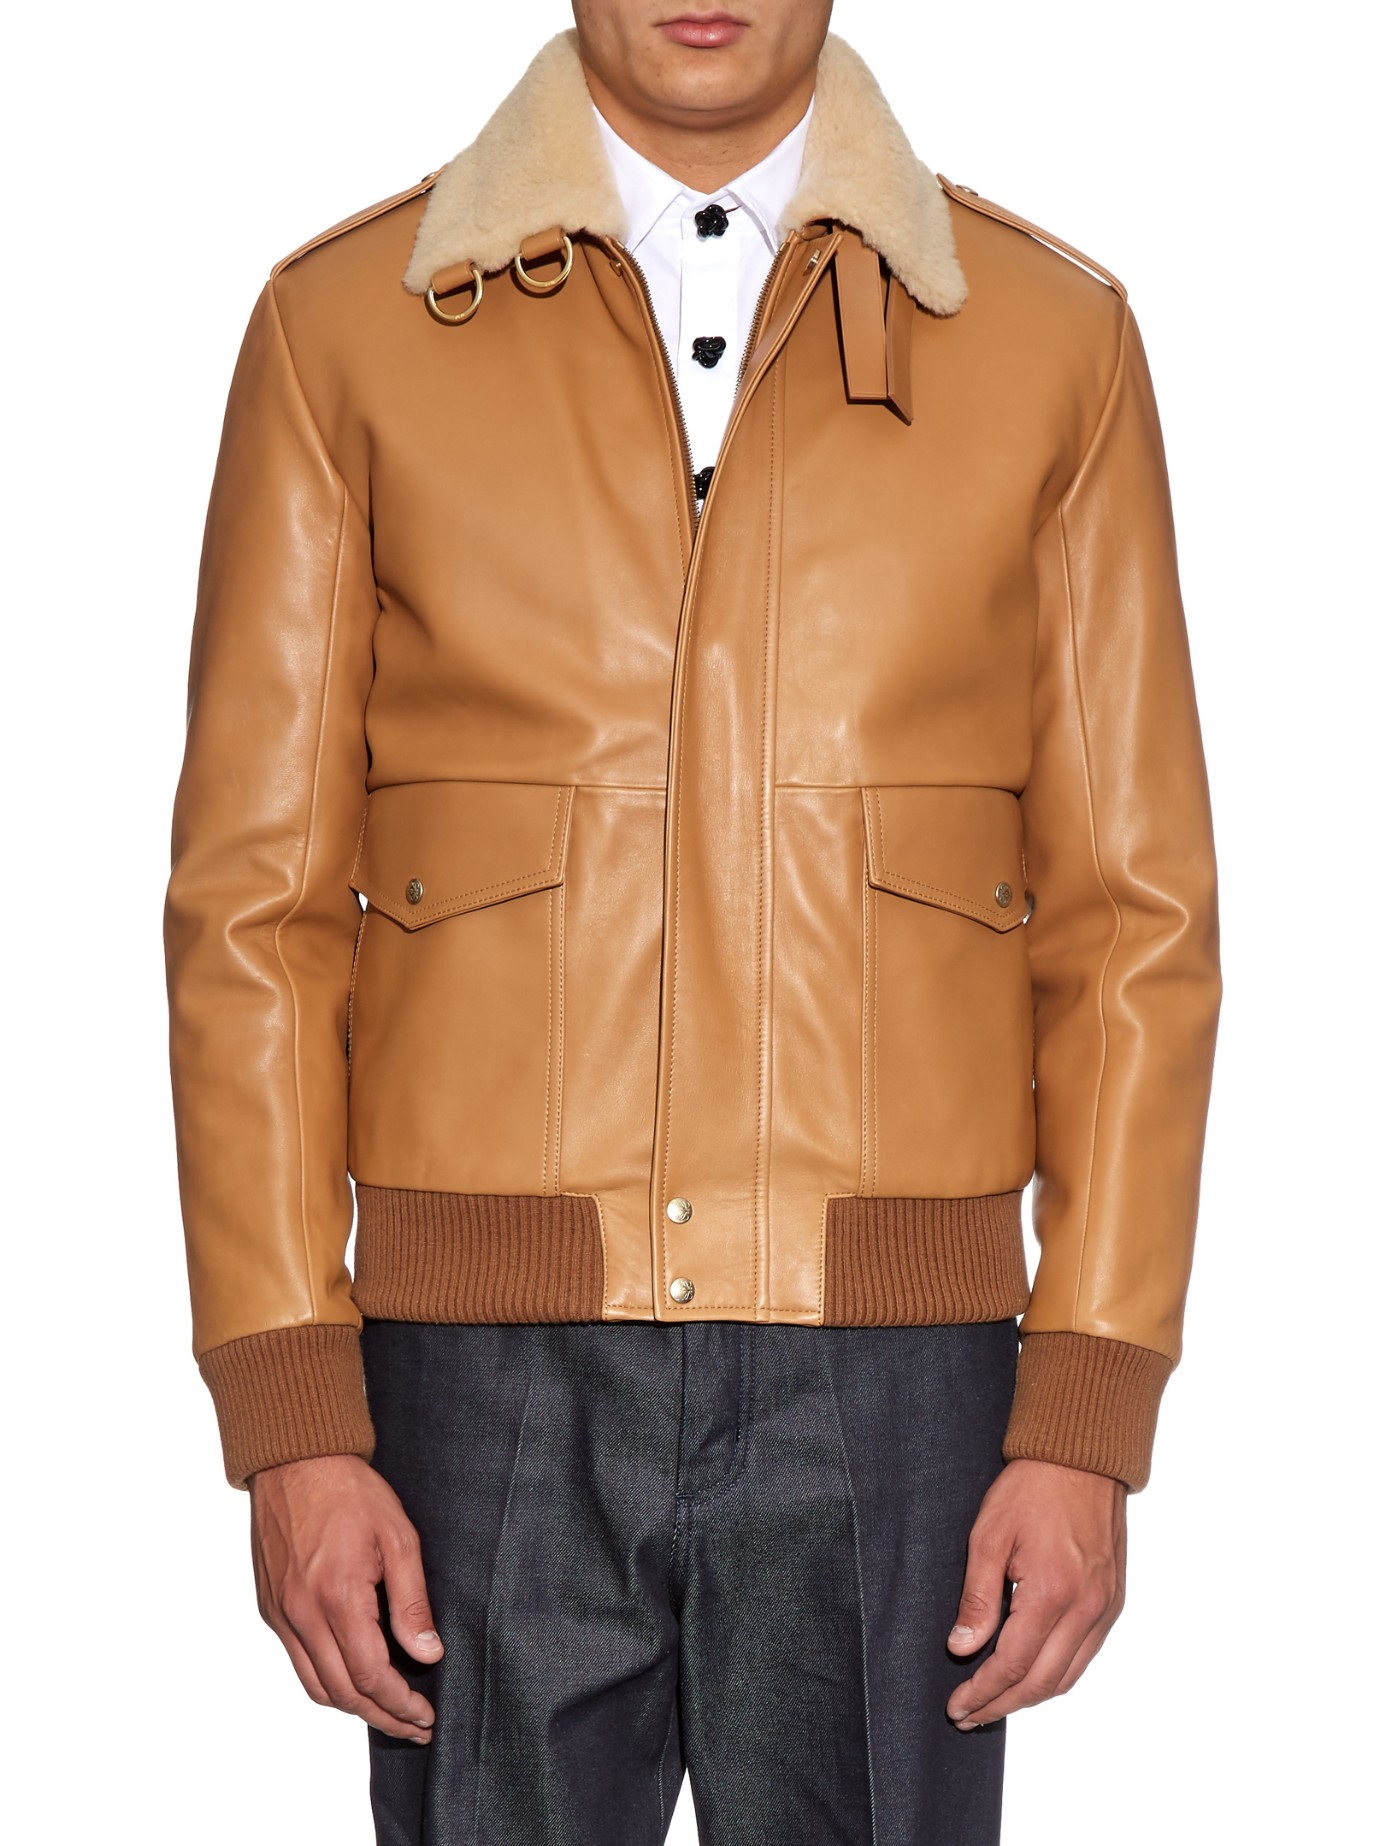 Lyst - Loewe Sheepskin-collar Leather Aviator Jacket in Natural for Men